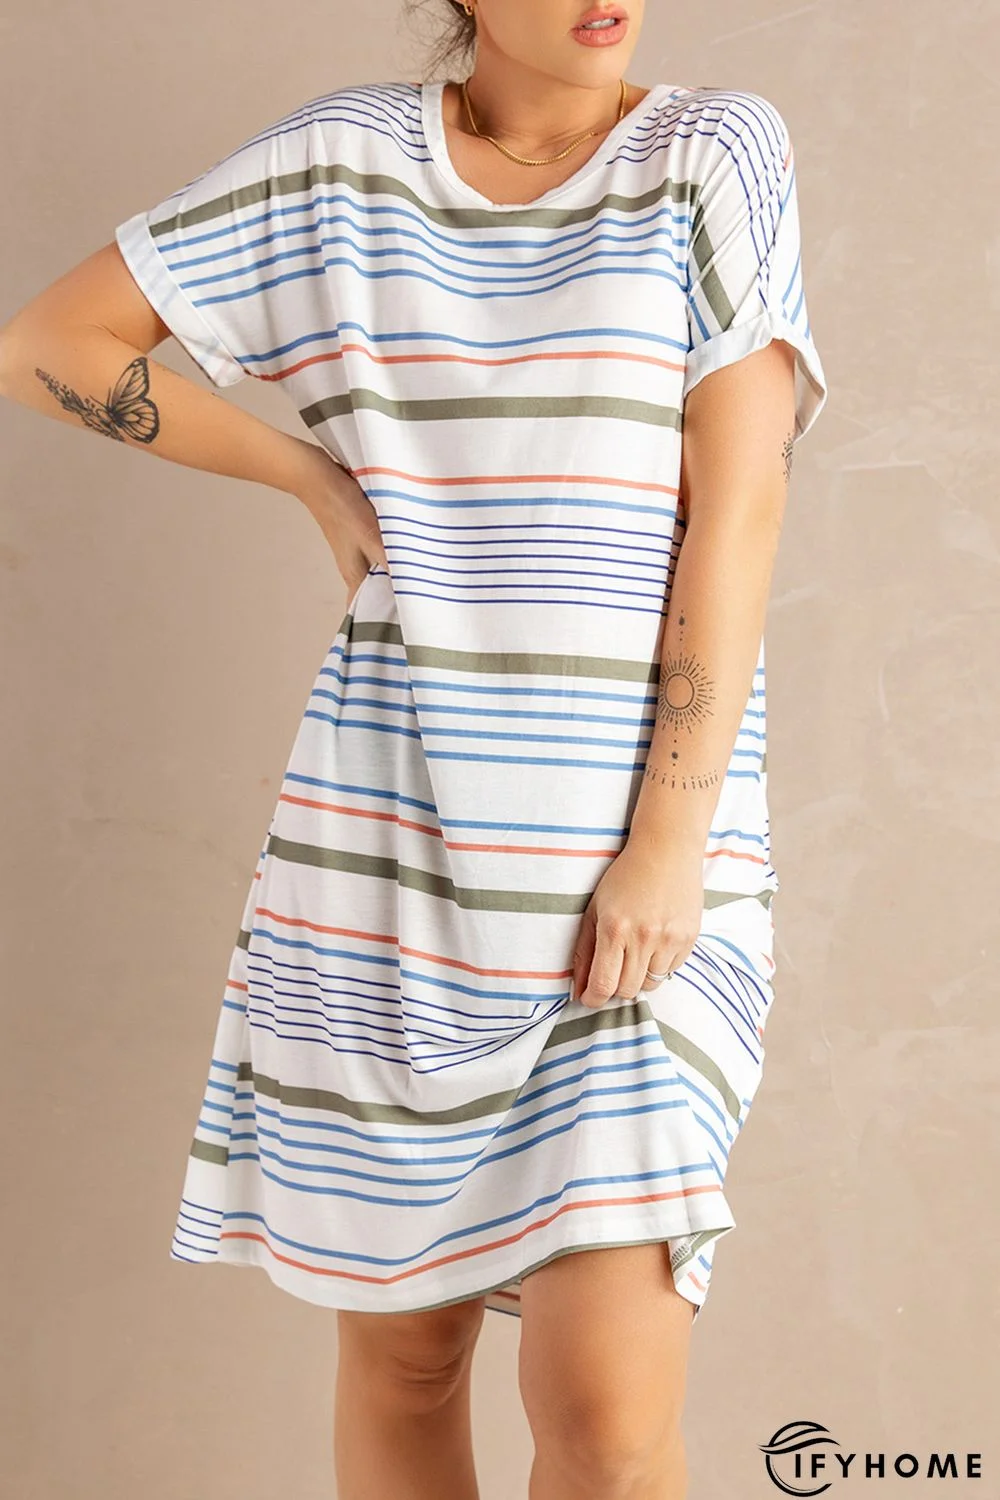 Short-Sleeved Striped T-shirt Mini Dress | IFYHOME